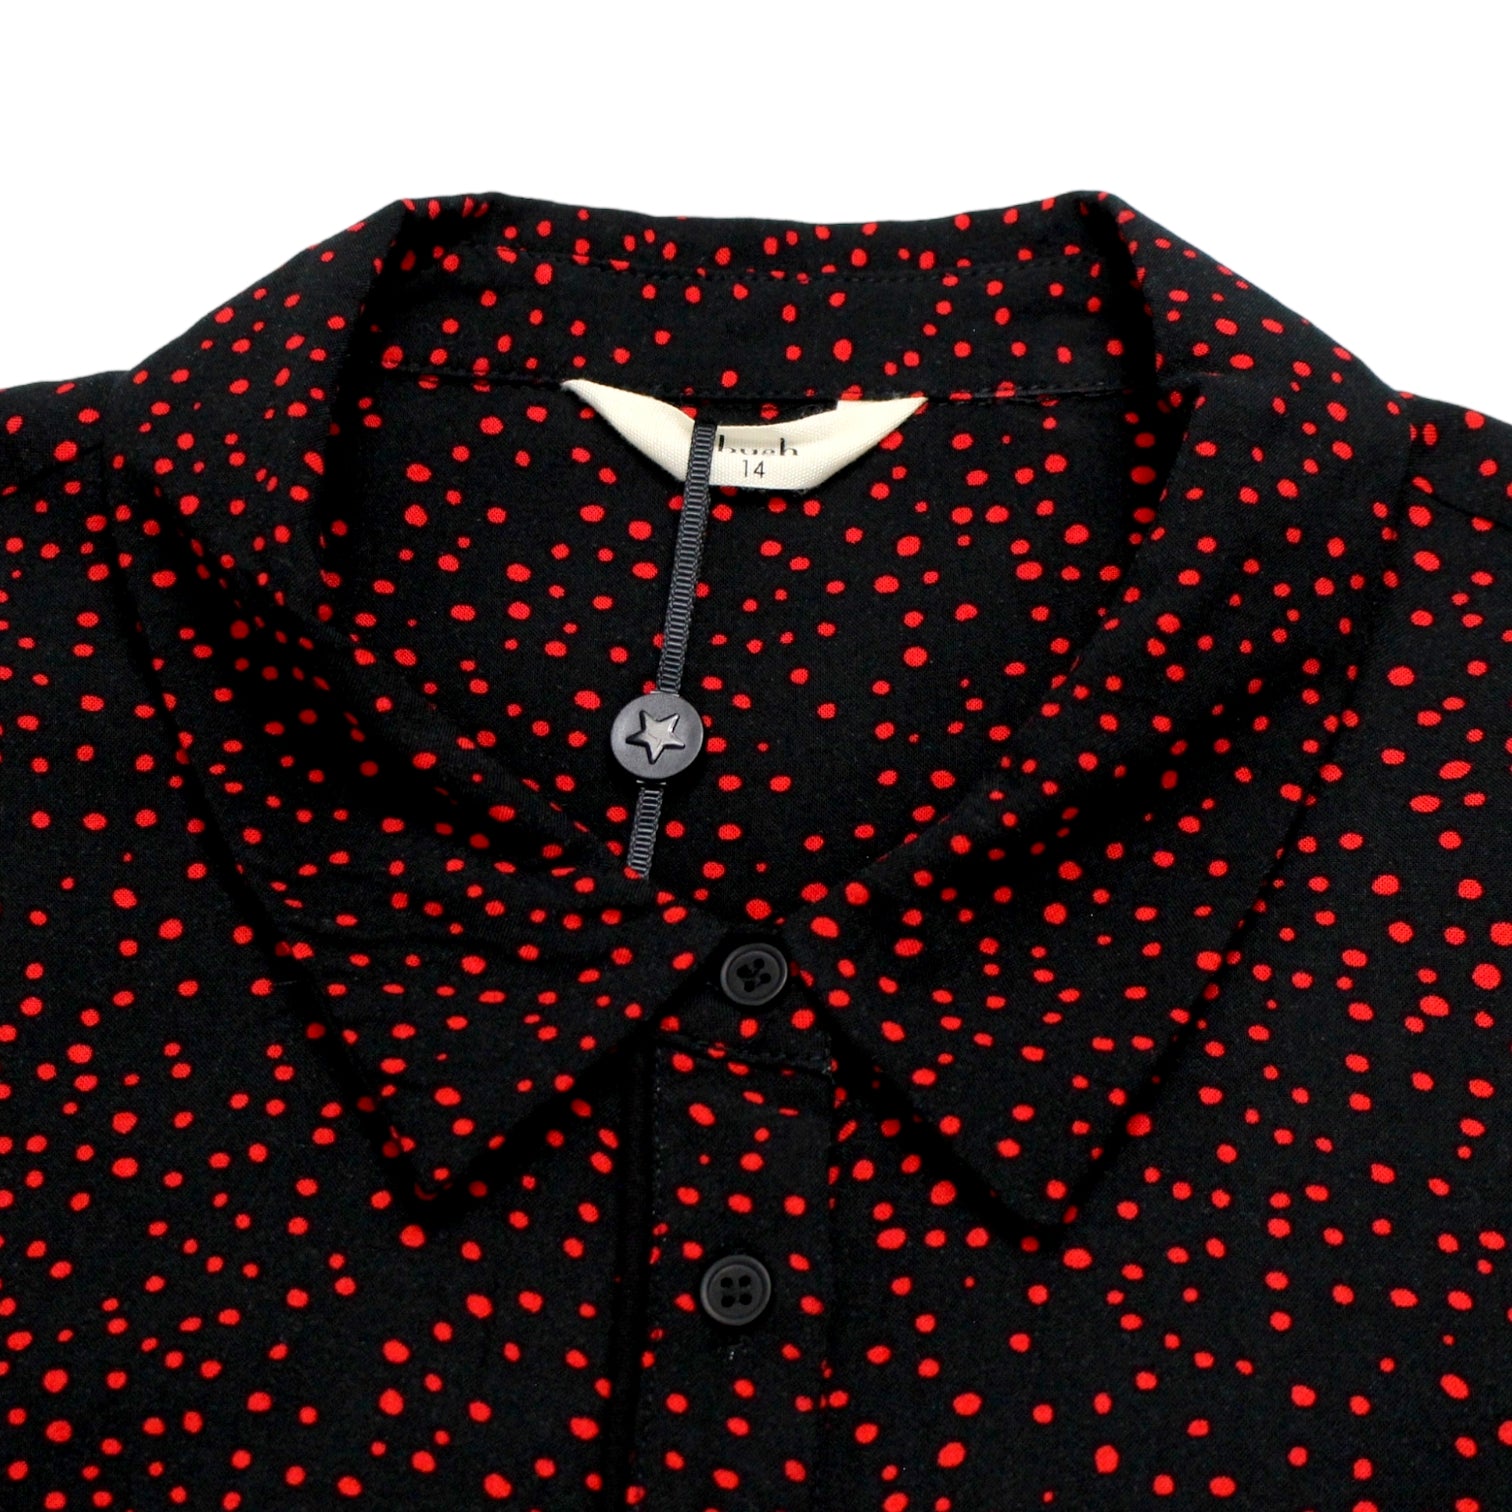 Hush Black/Red Dot Matilda Dress